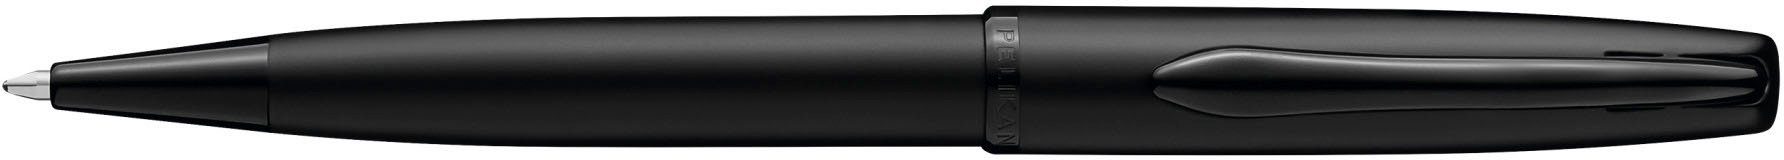 Drehkugelschreiber Pelikan carbon K36 Jazz® Elegance, schwarz Noble